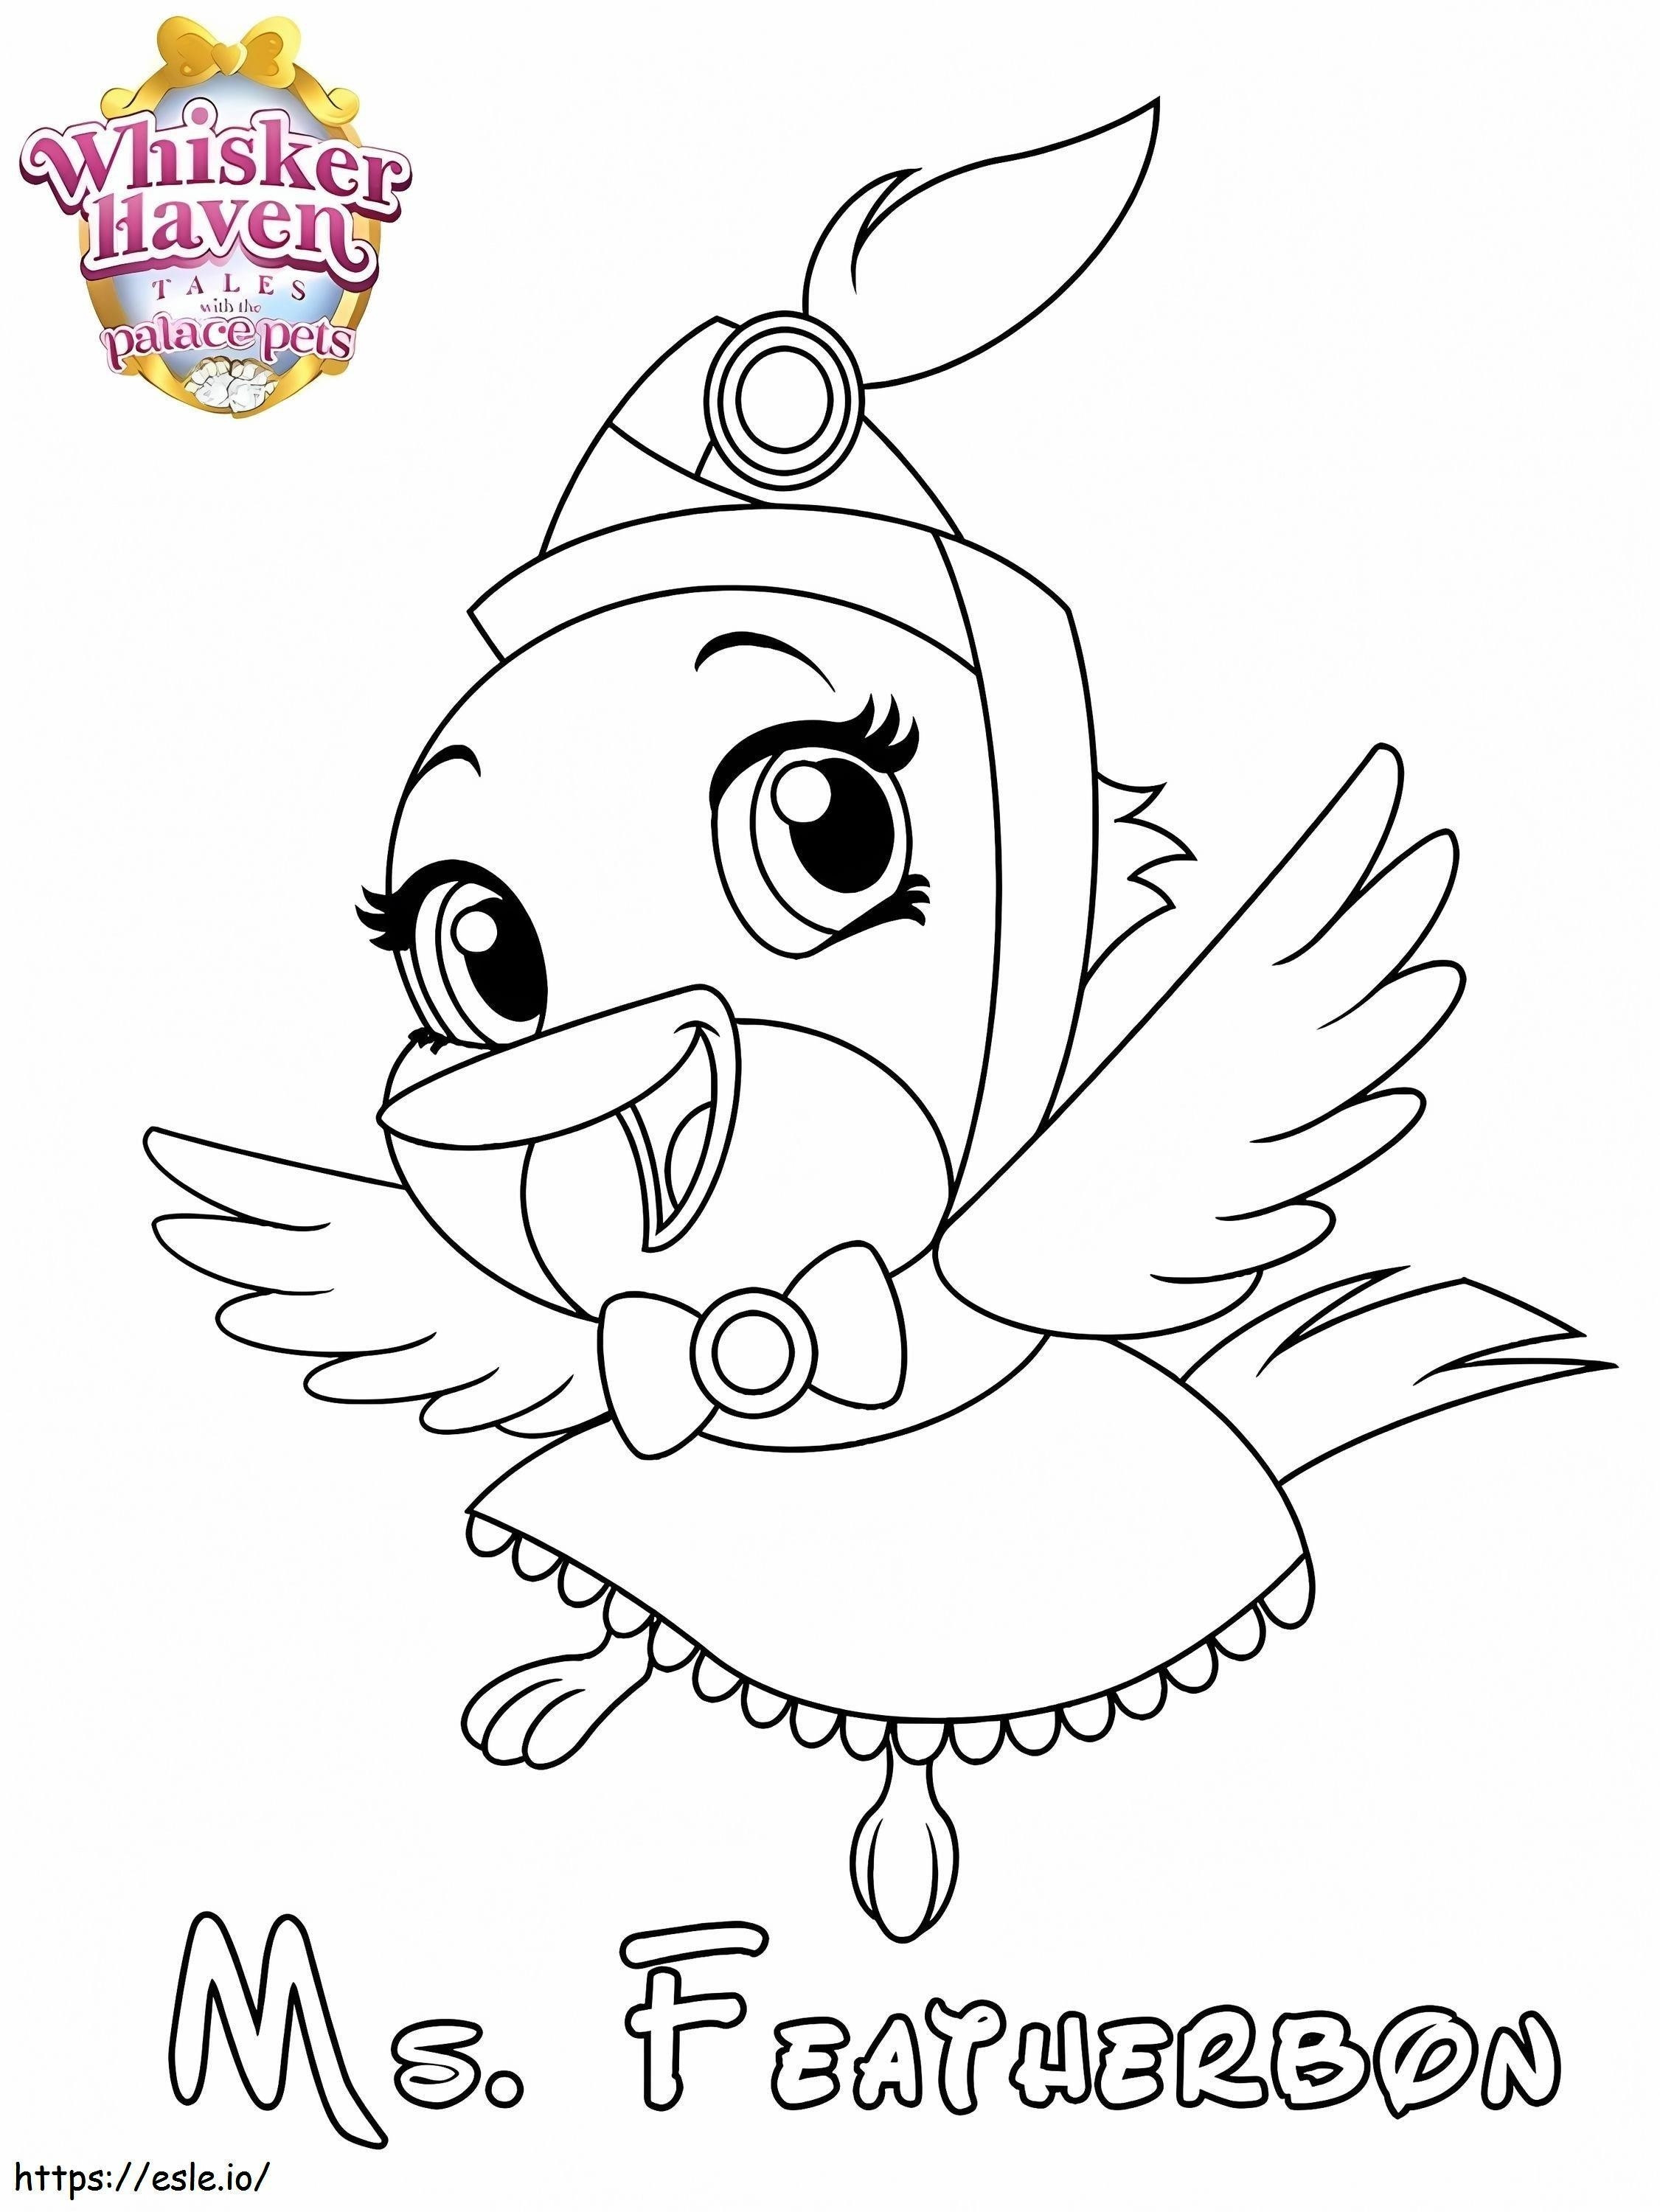 1587369588 Ms Featherbon Princess Palace Pet coloring page